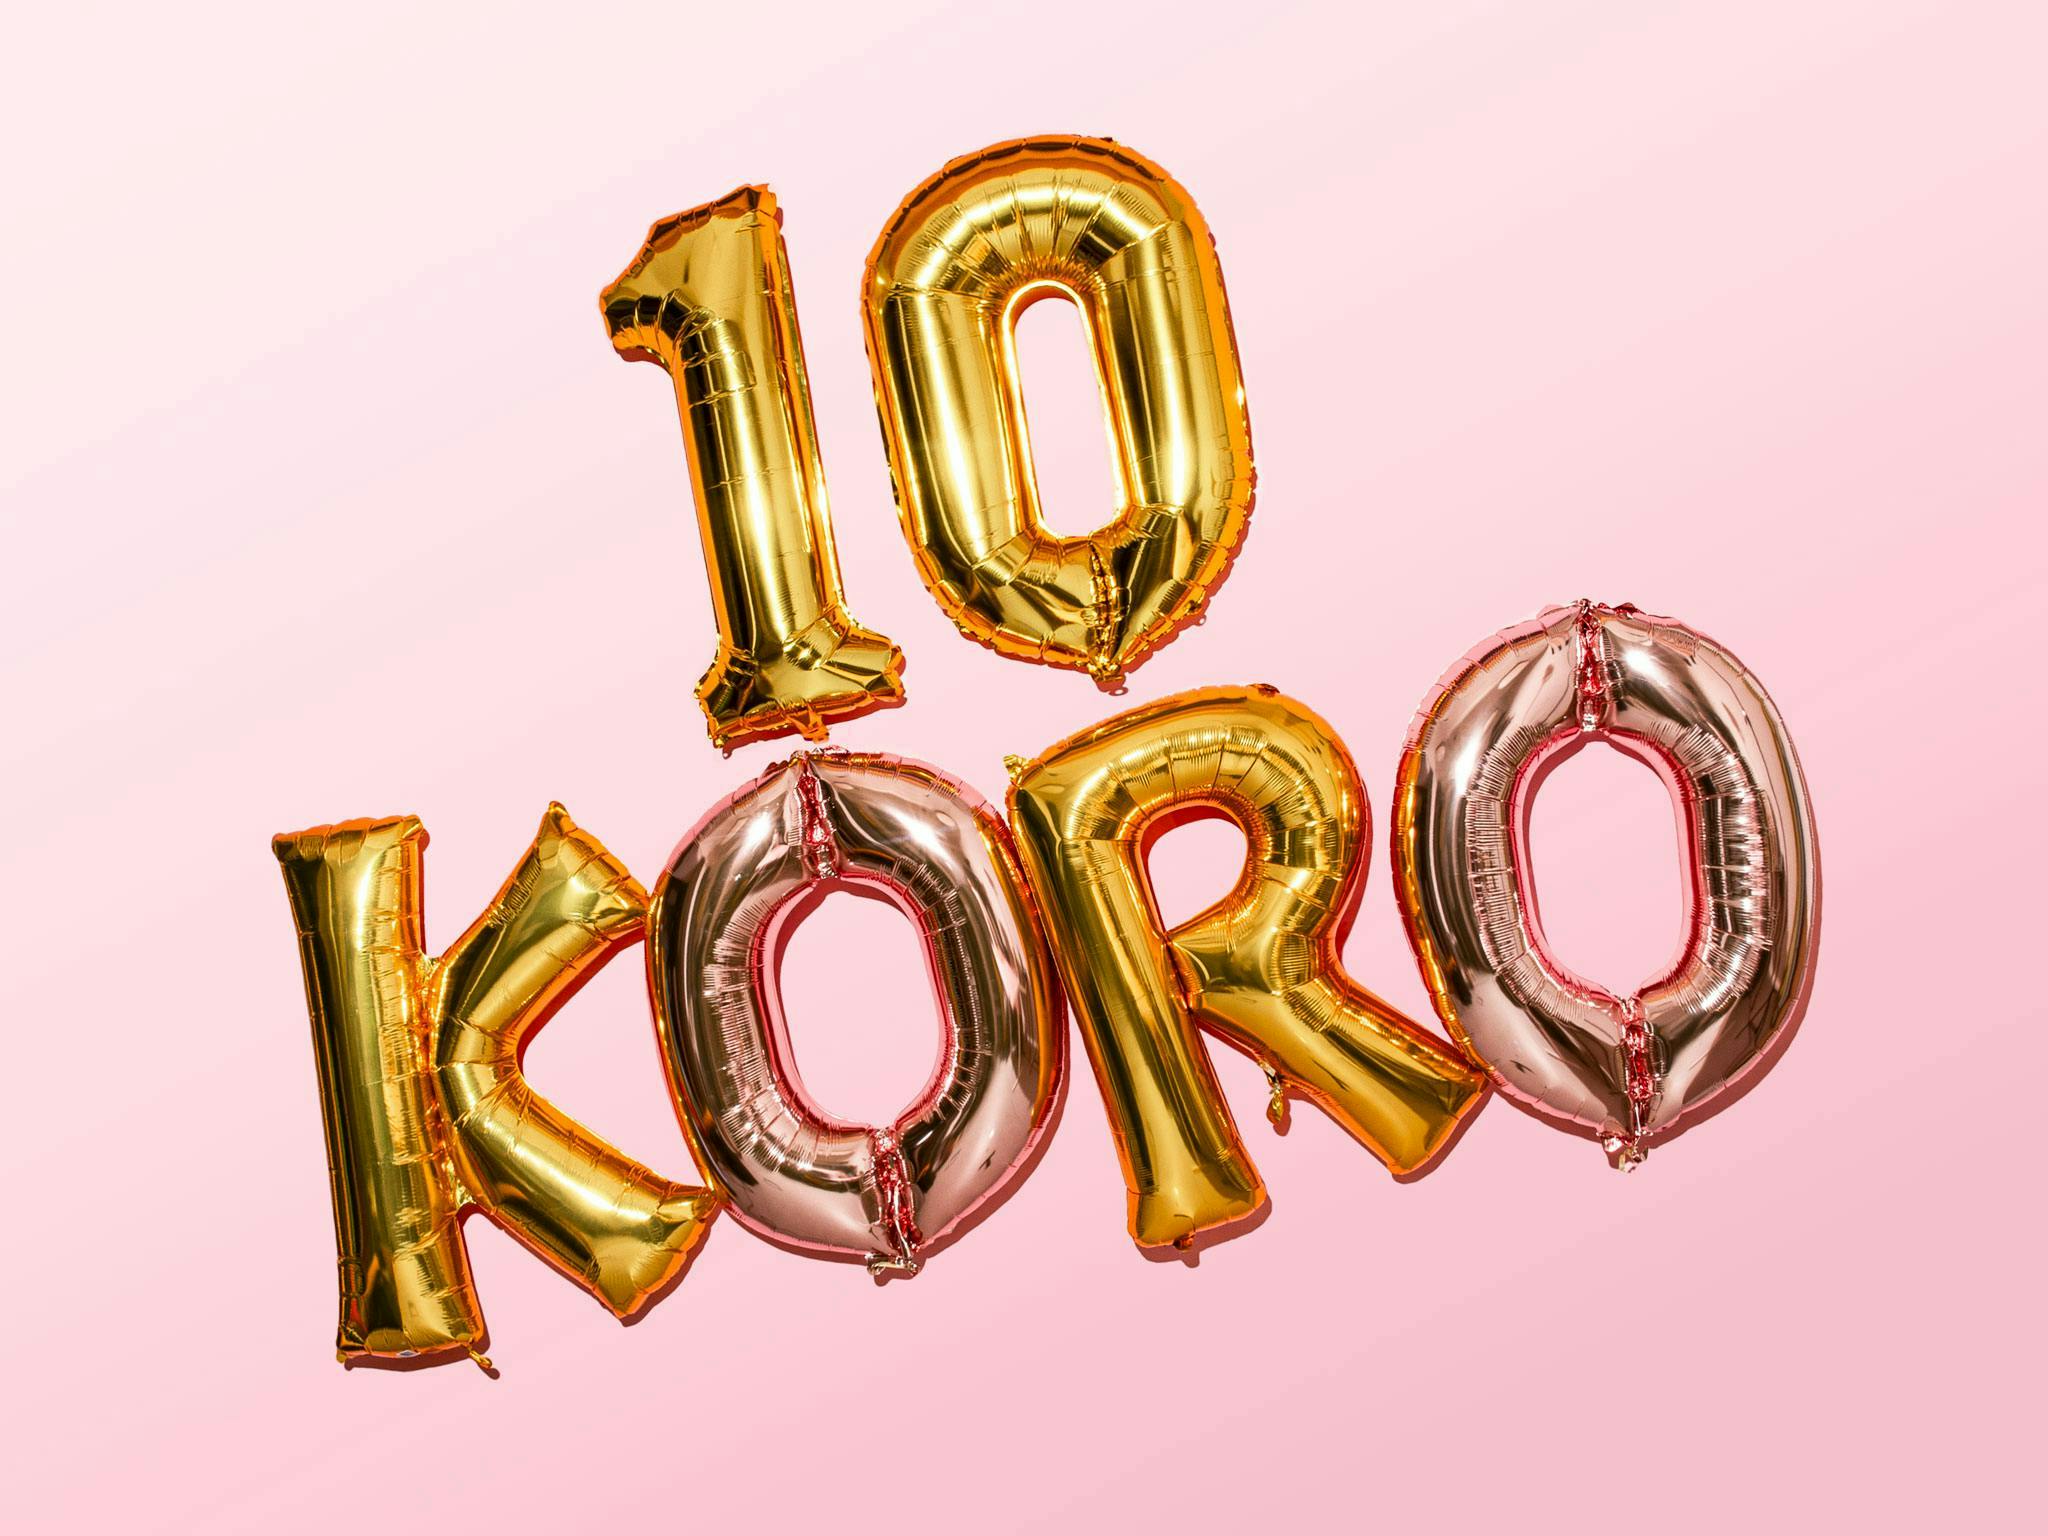 Vi har noget at fejre: 10 år med KoRo